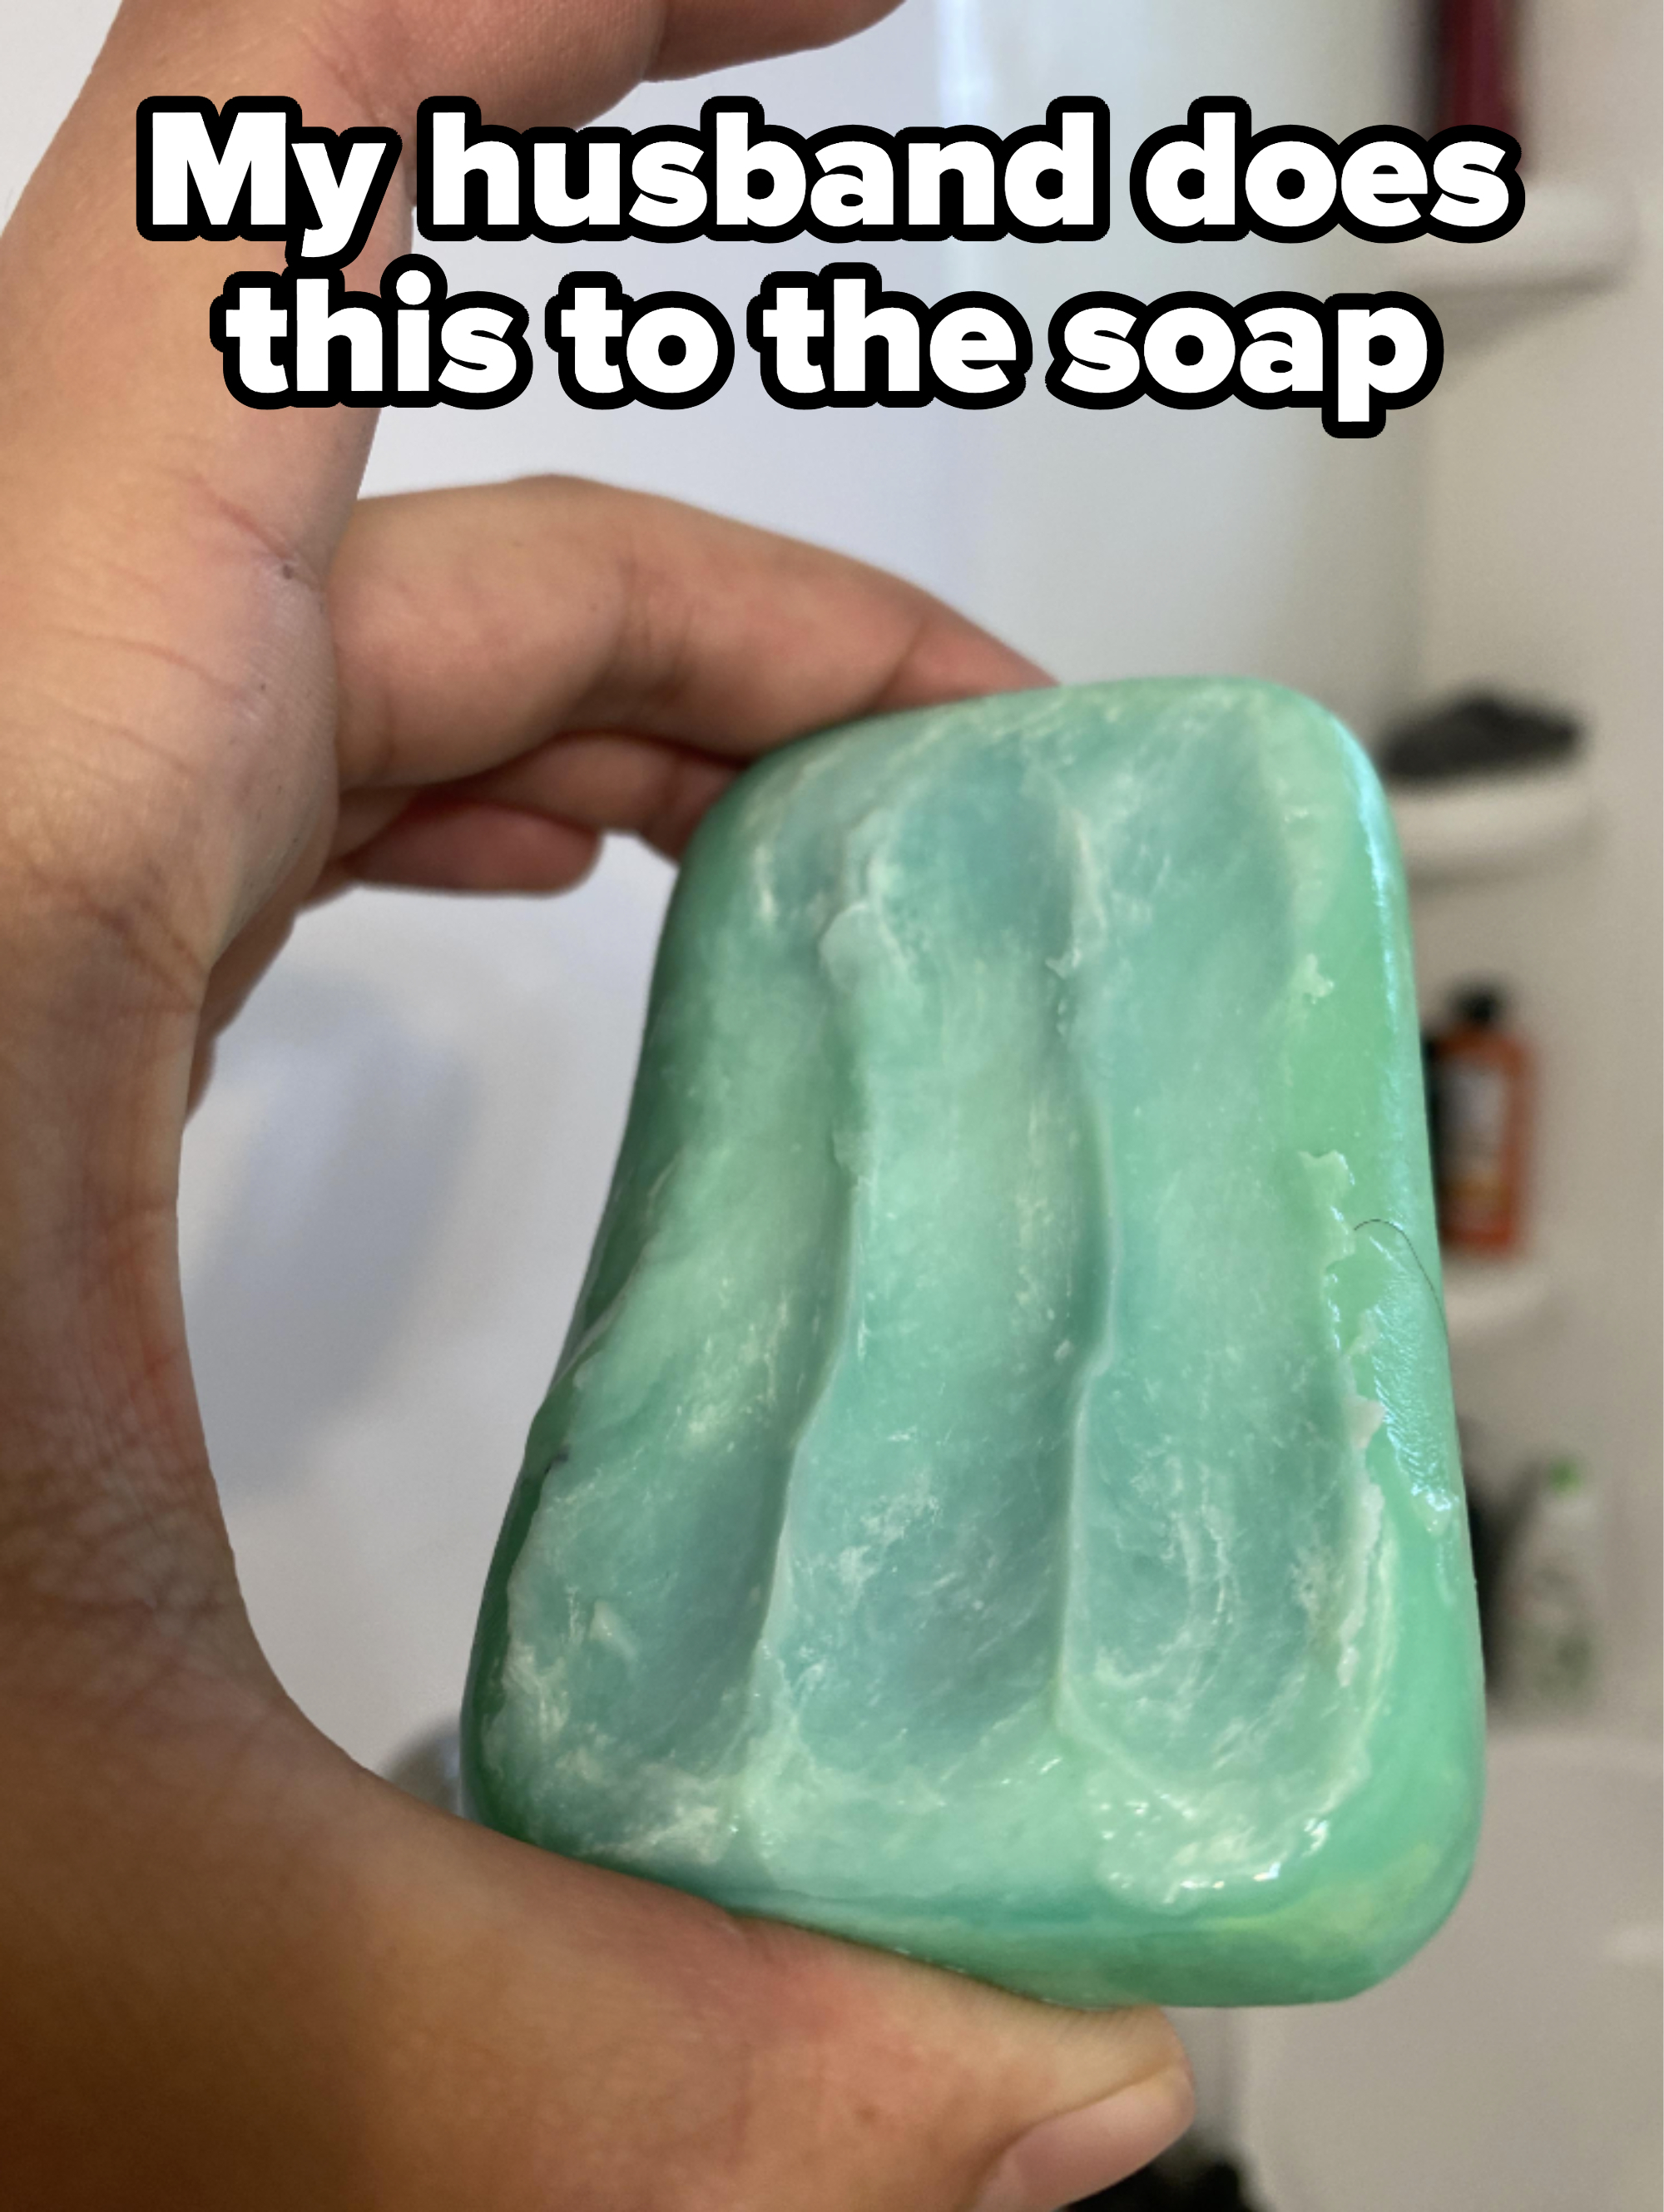 Finger marks in soap